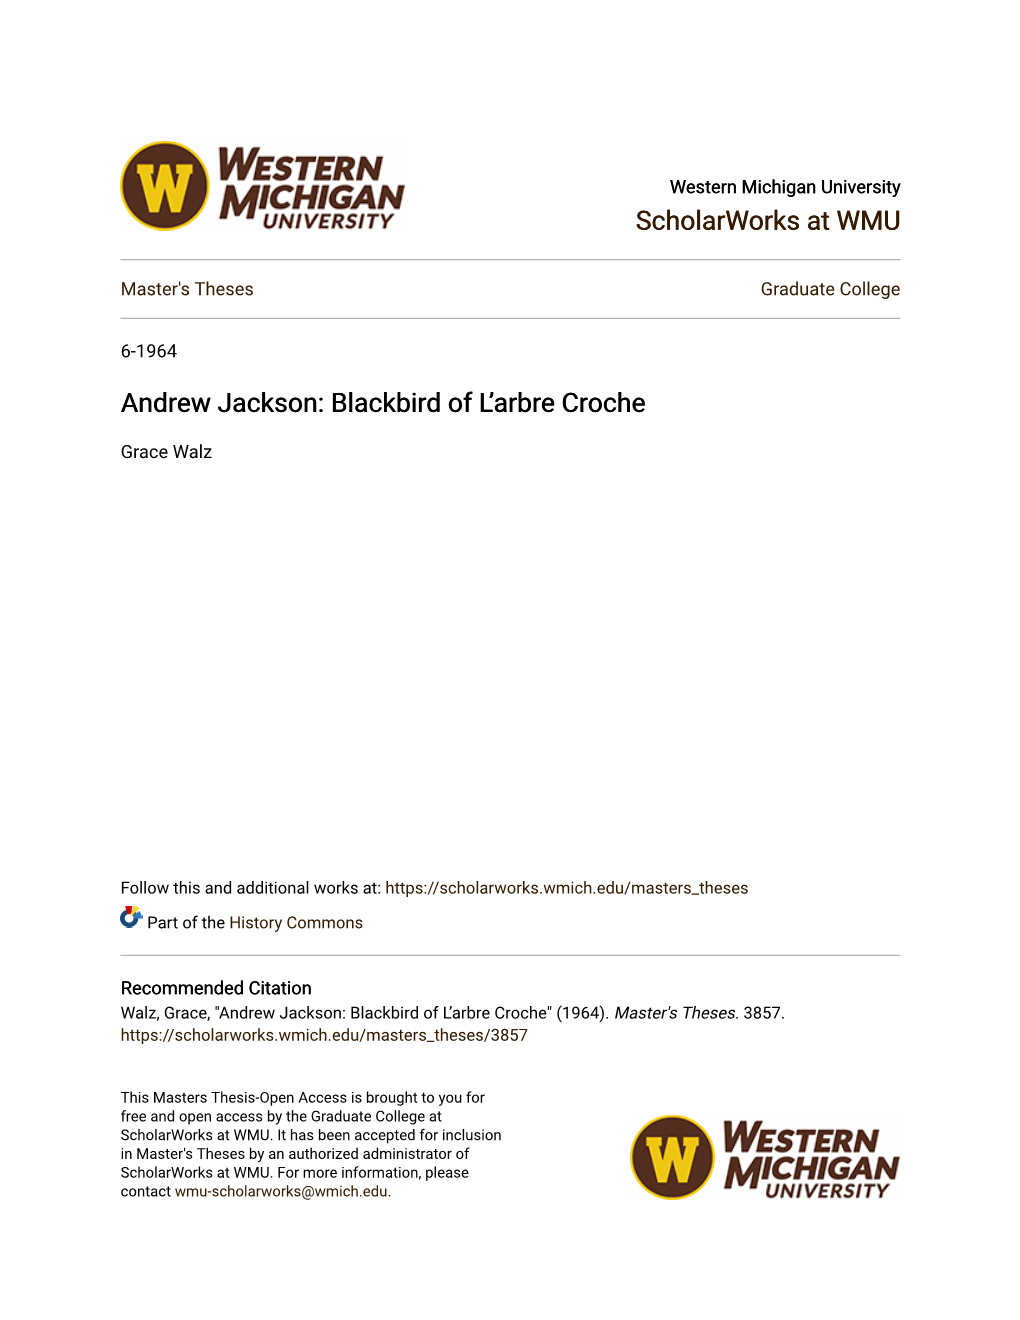 Andrew Jackson: Blackbird of L’Arbre Croche